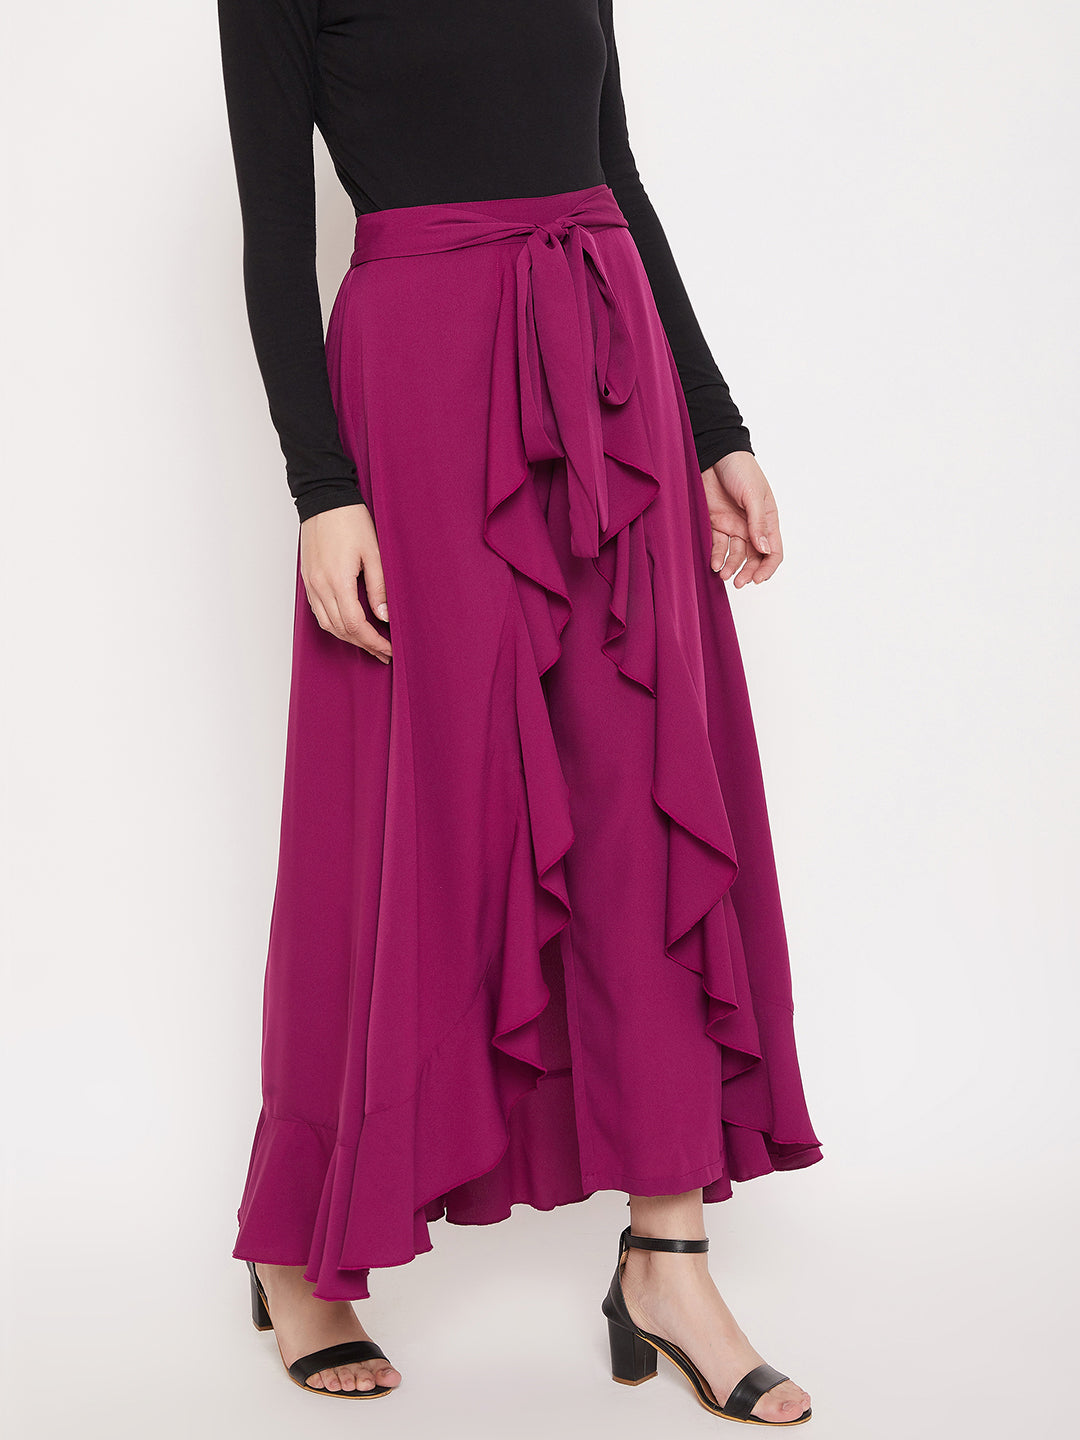 Buy fancy Look Women'Ruffle Pants Split High Waist Maxi Long Crepe Palazzo Overlay  Pant Skirt (grey) at Amazon.in